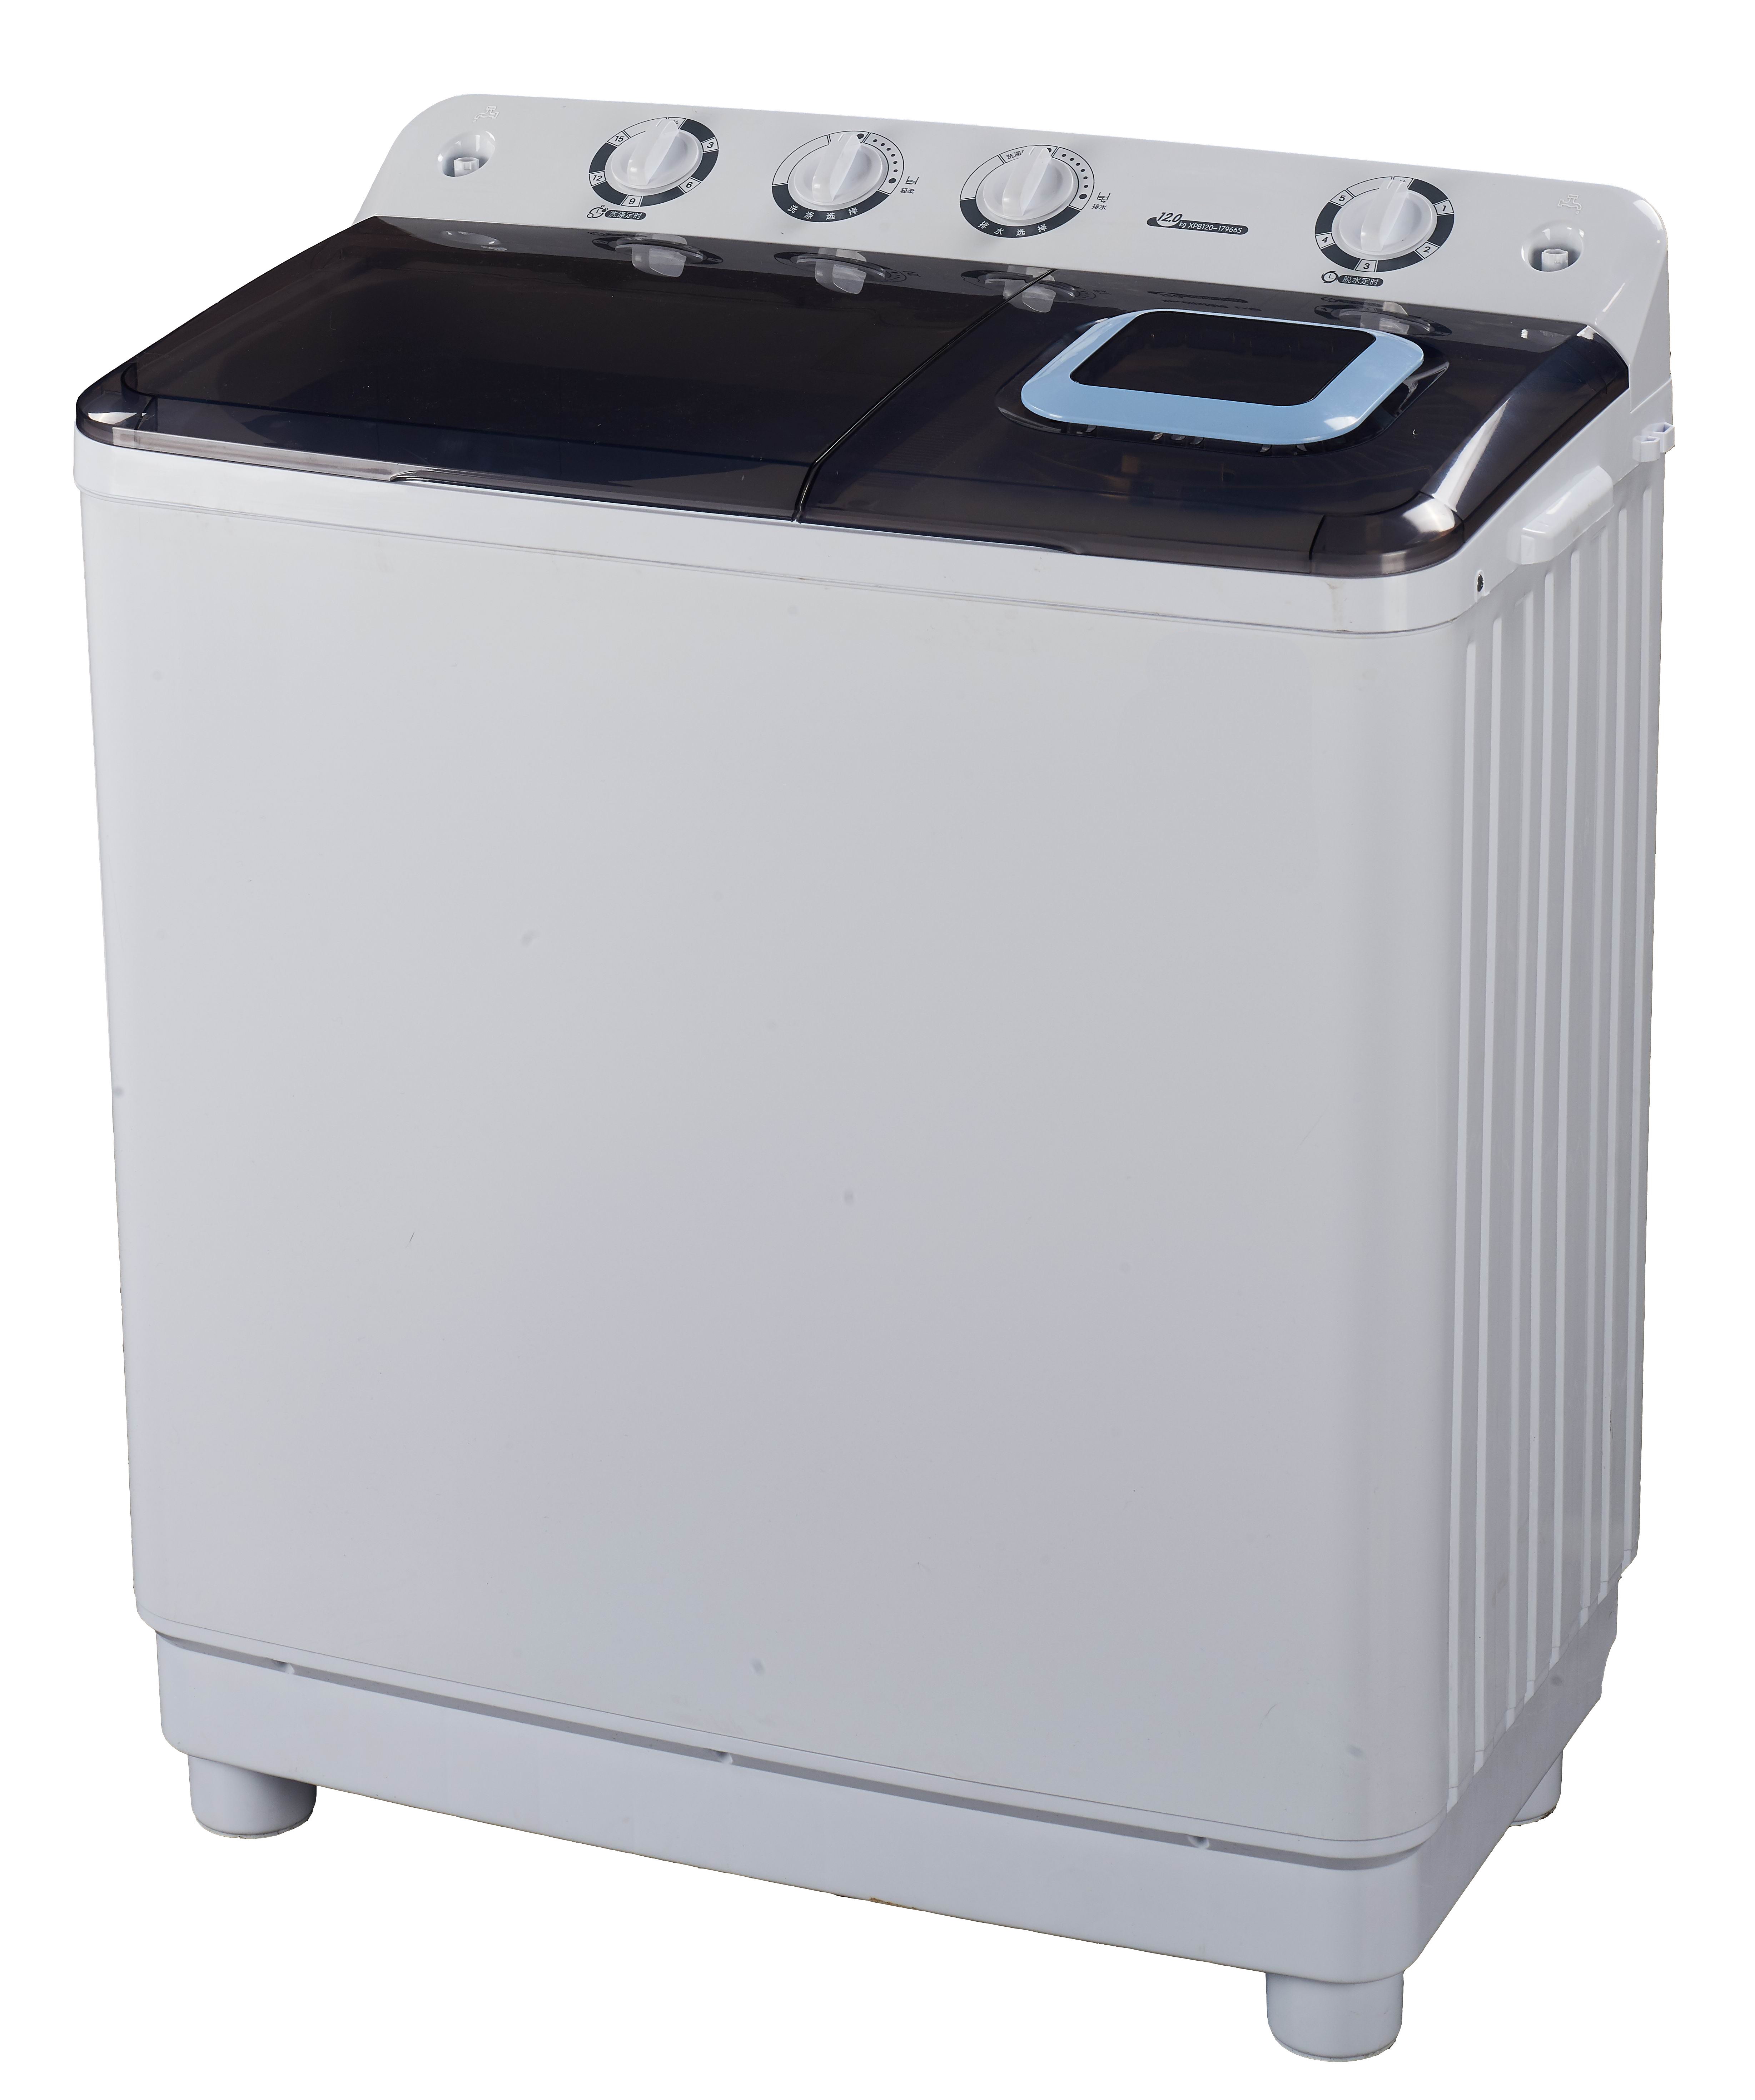 Konka twin tub washing machine